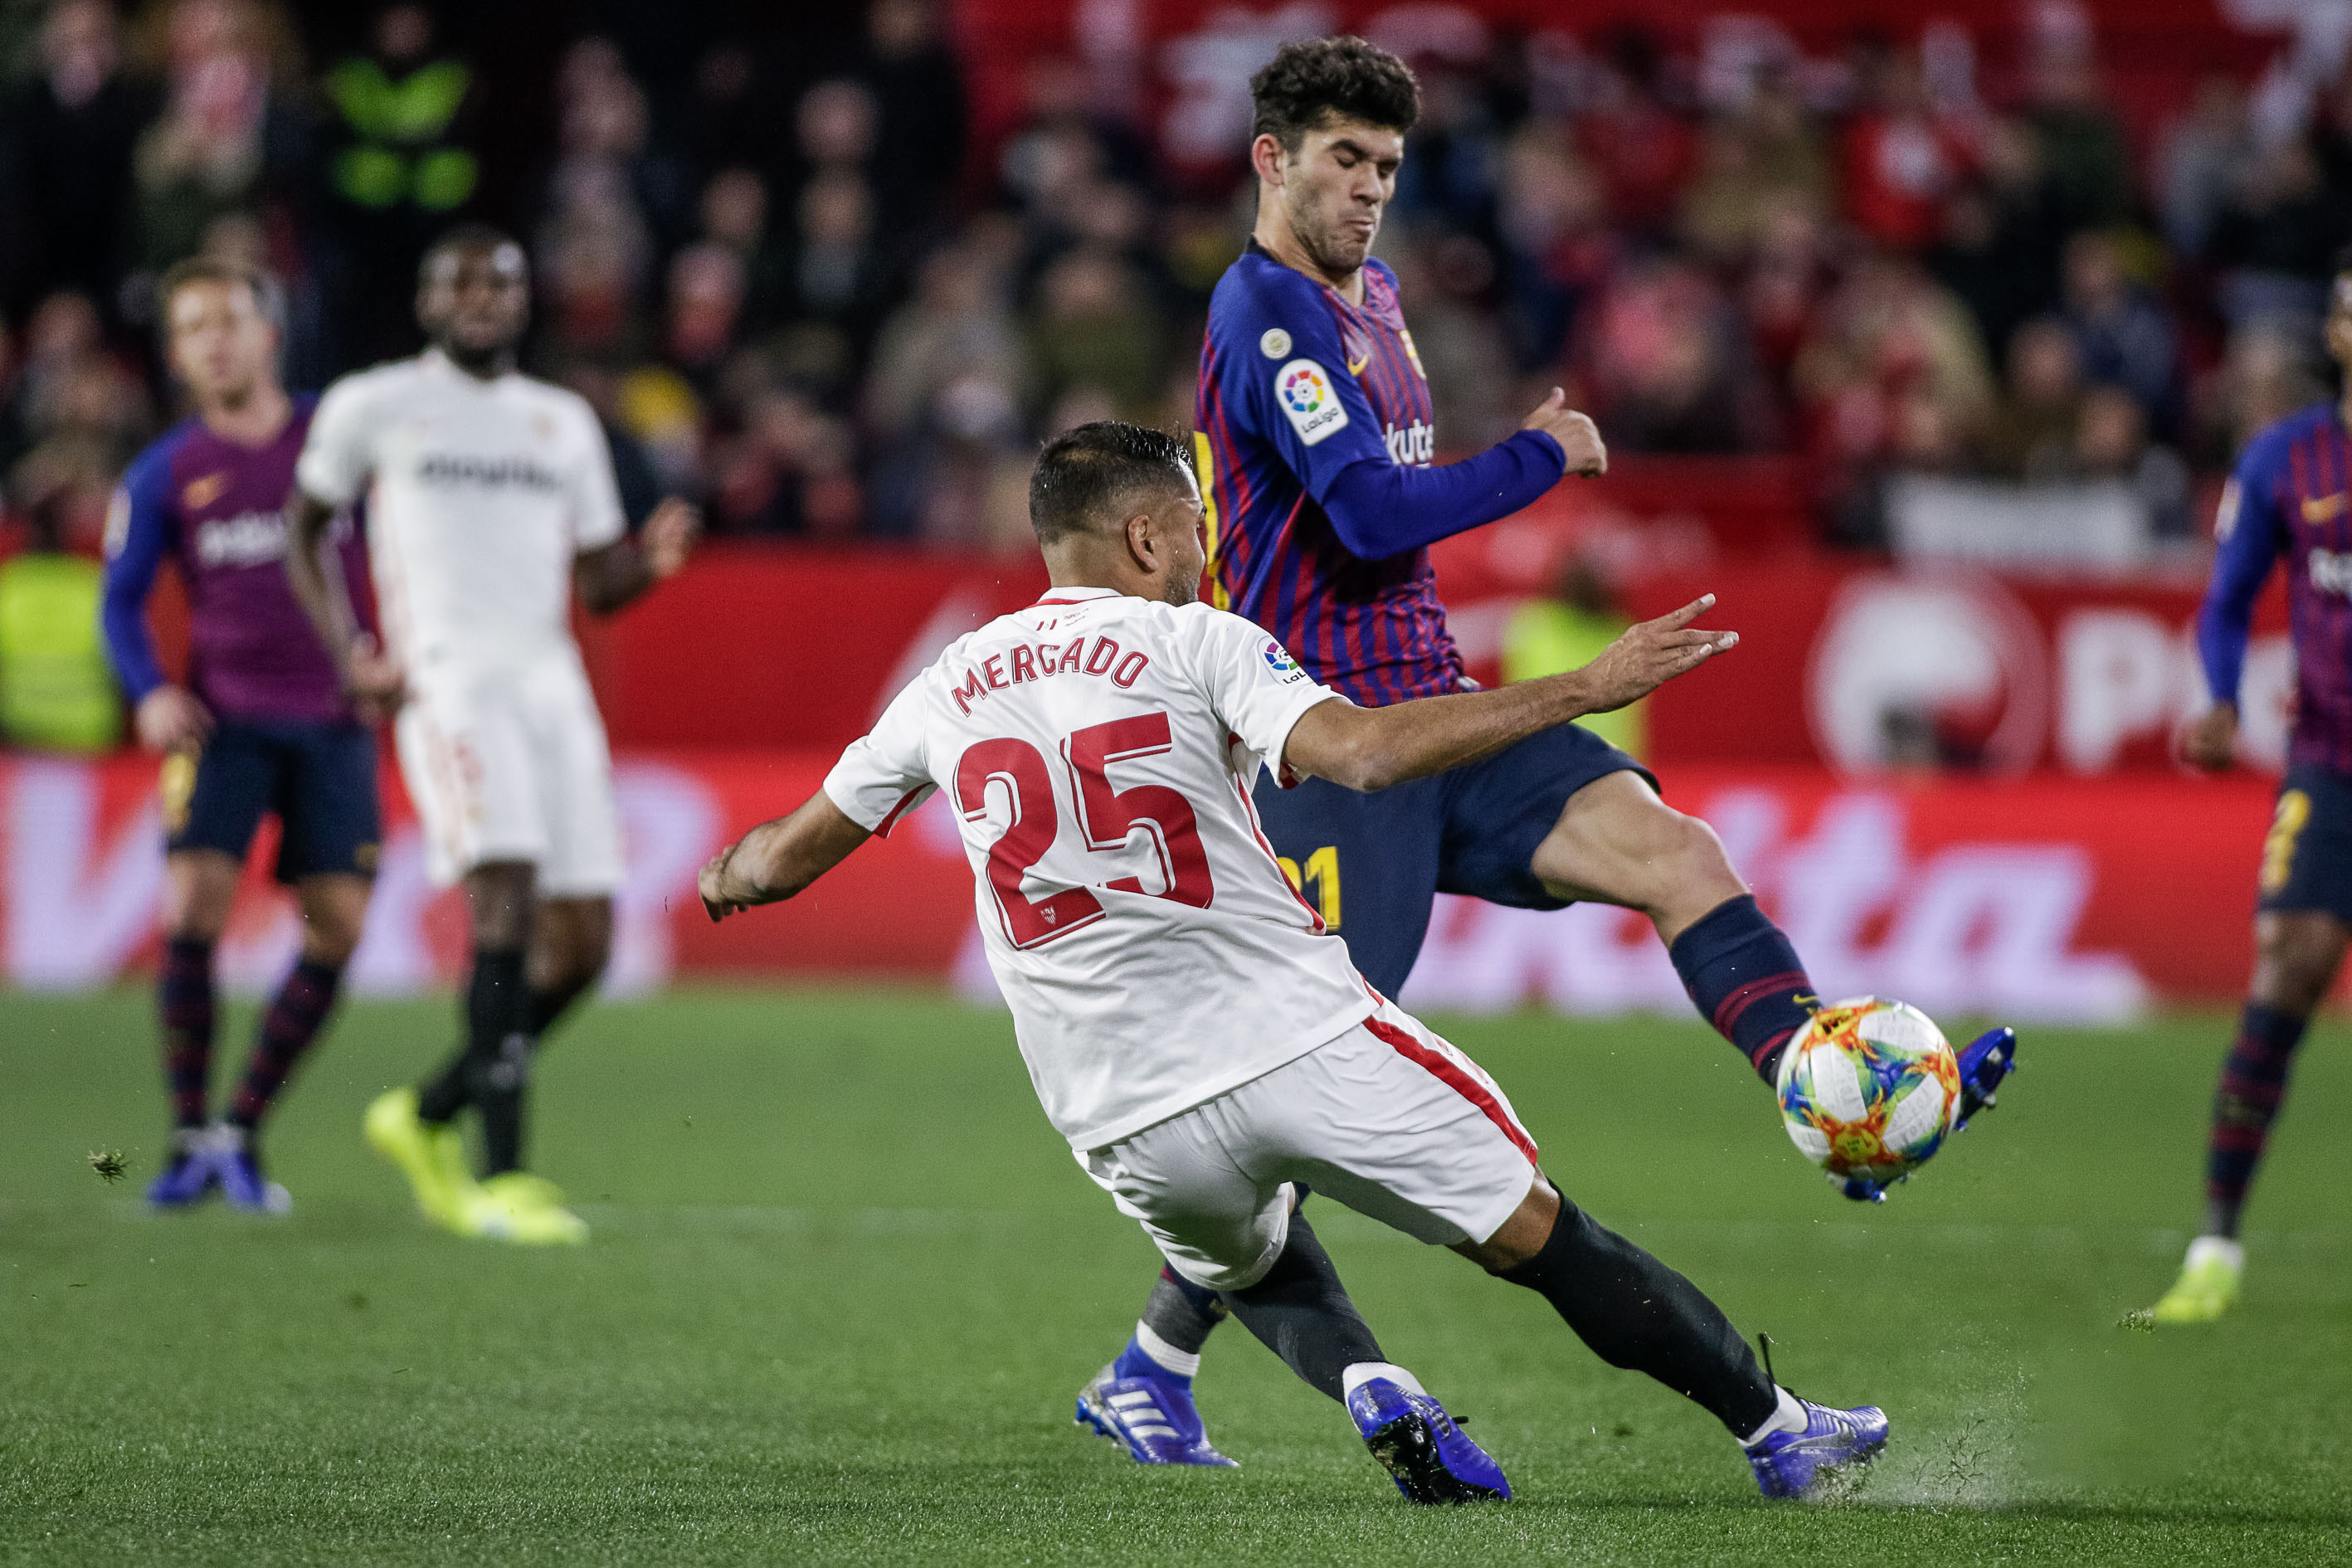 Mercado of Sevilla FC against FC Barcelona